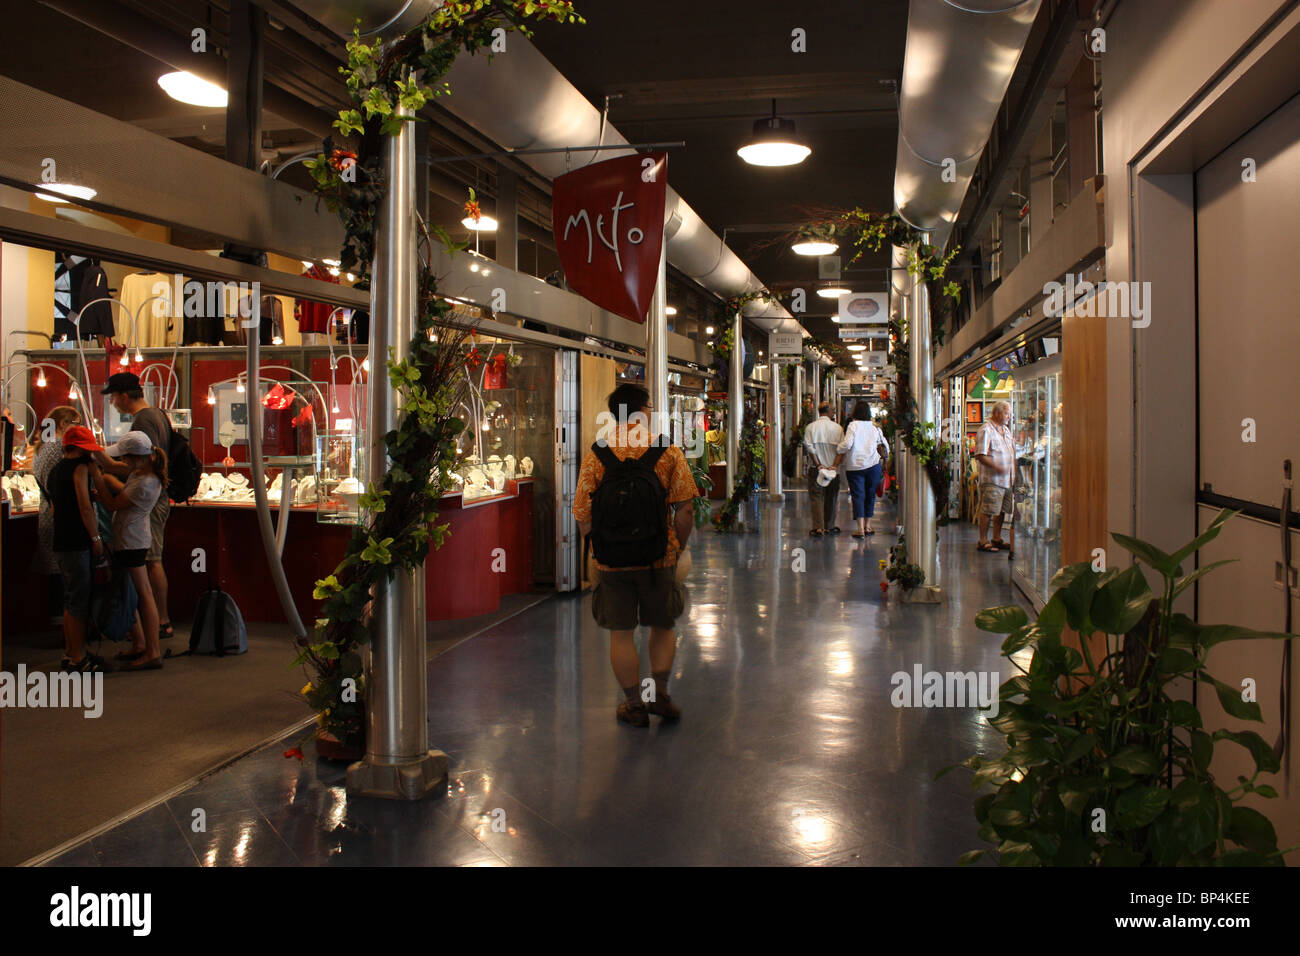 Inside Bonsecours Market hallway shops tourist Stock Photo - Alamy